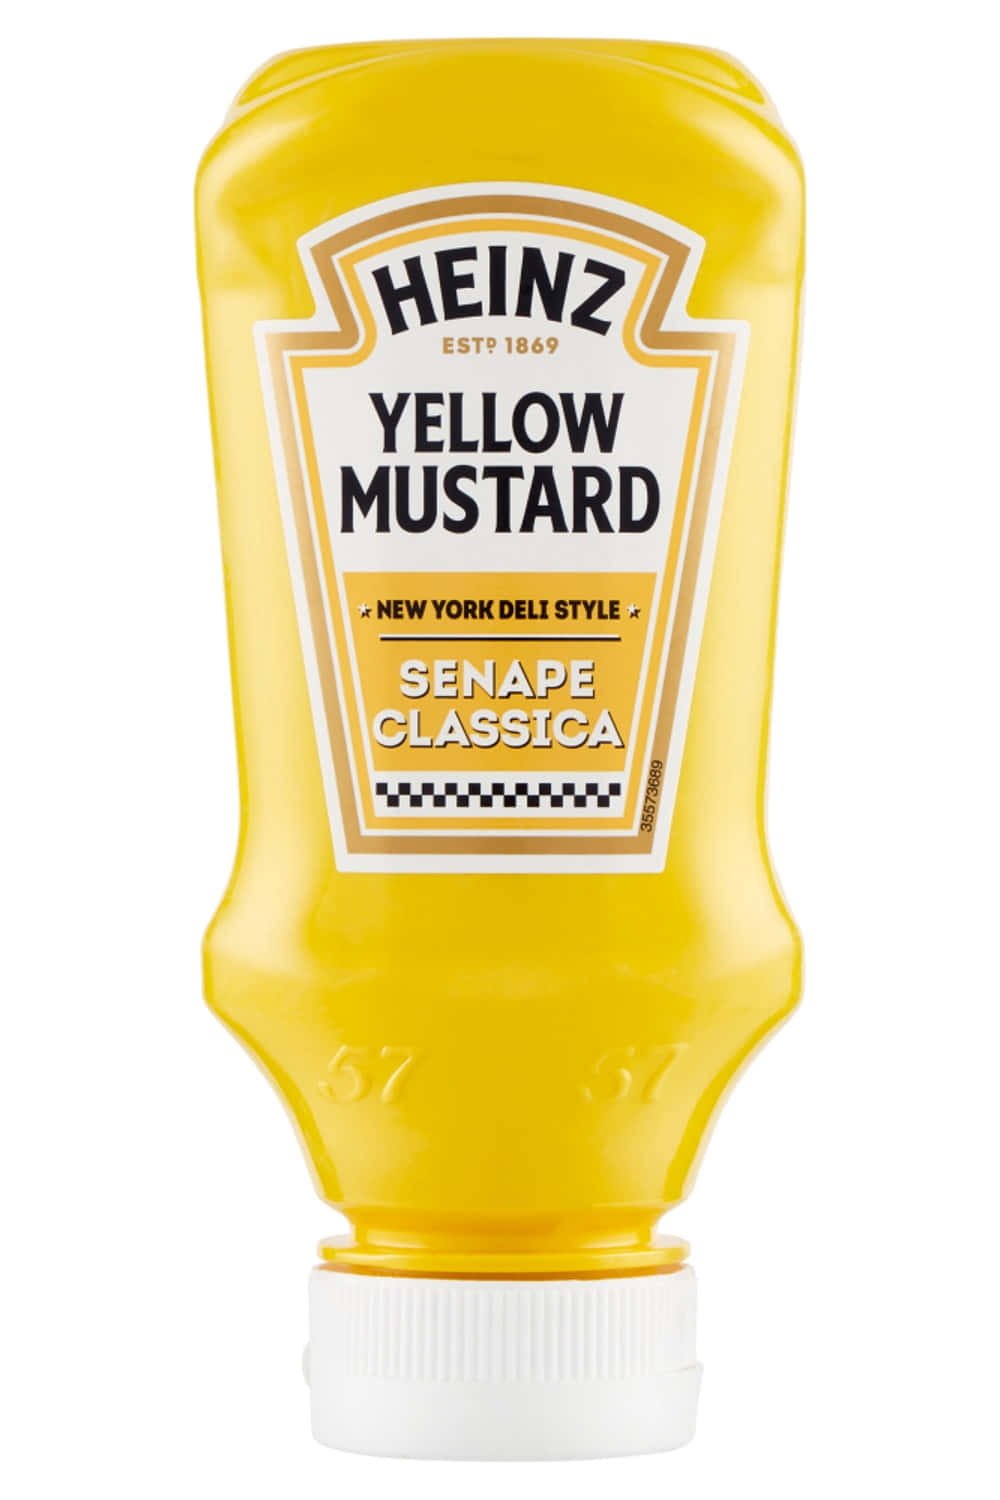 Heinz Yellow Mustard Bottle Wallpaper